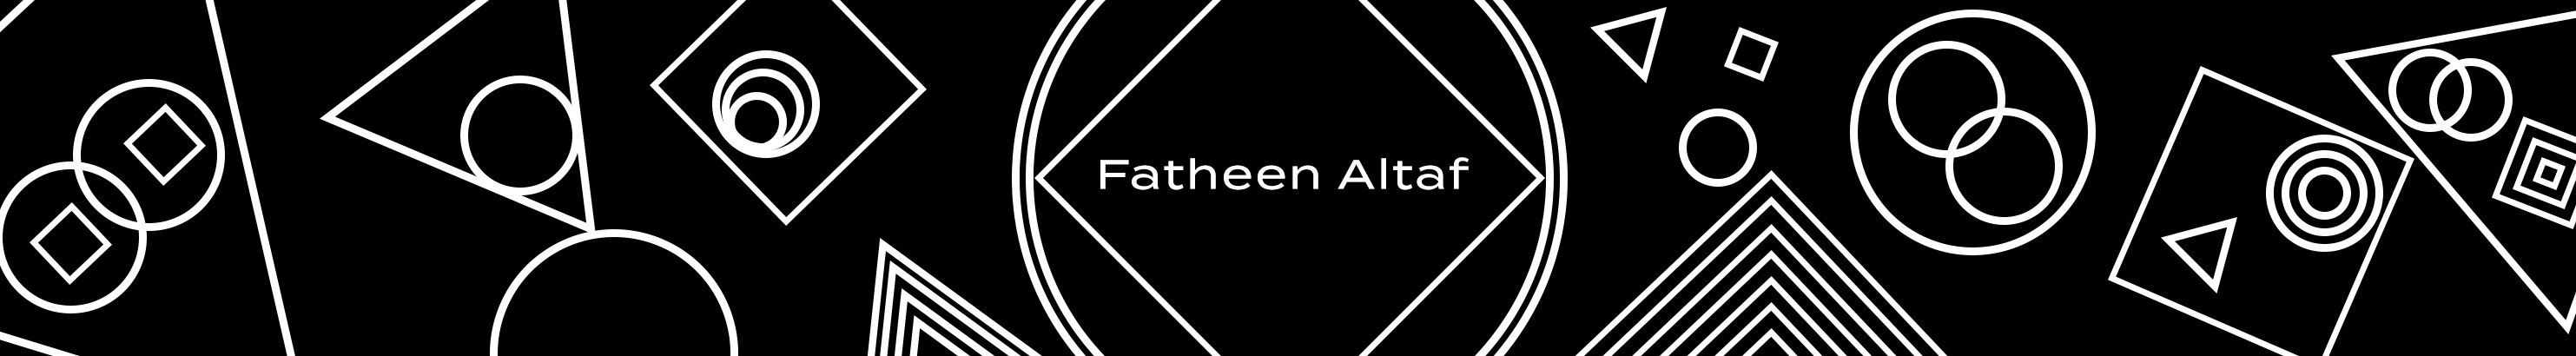 Fatheen Altaf's profile banner